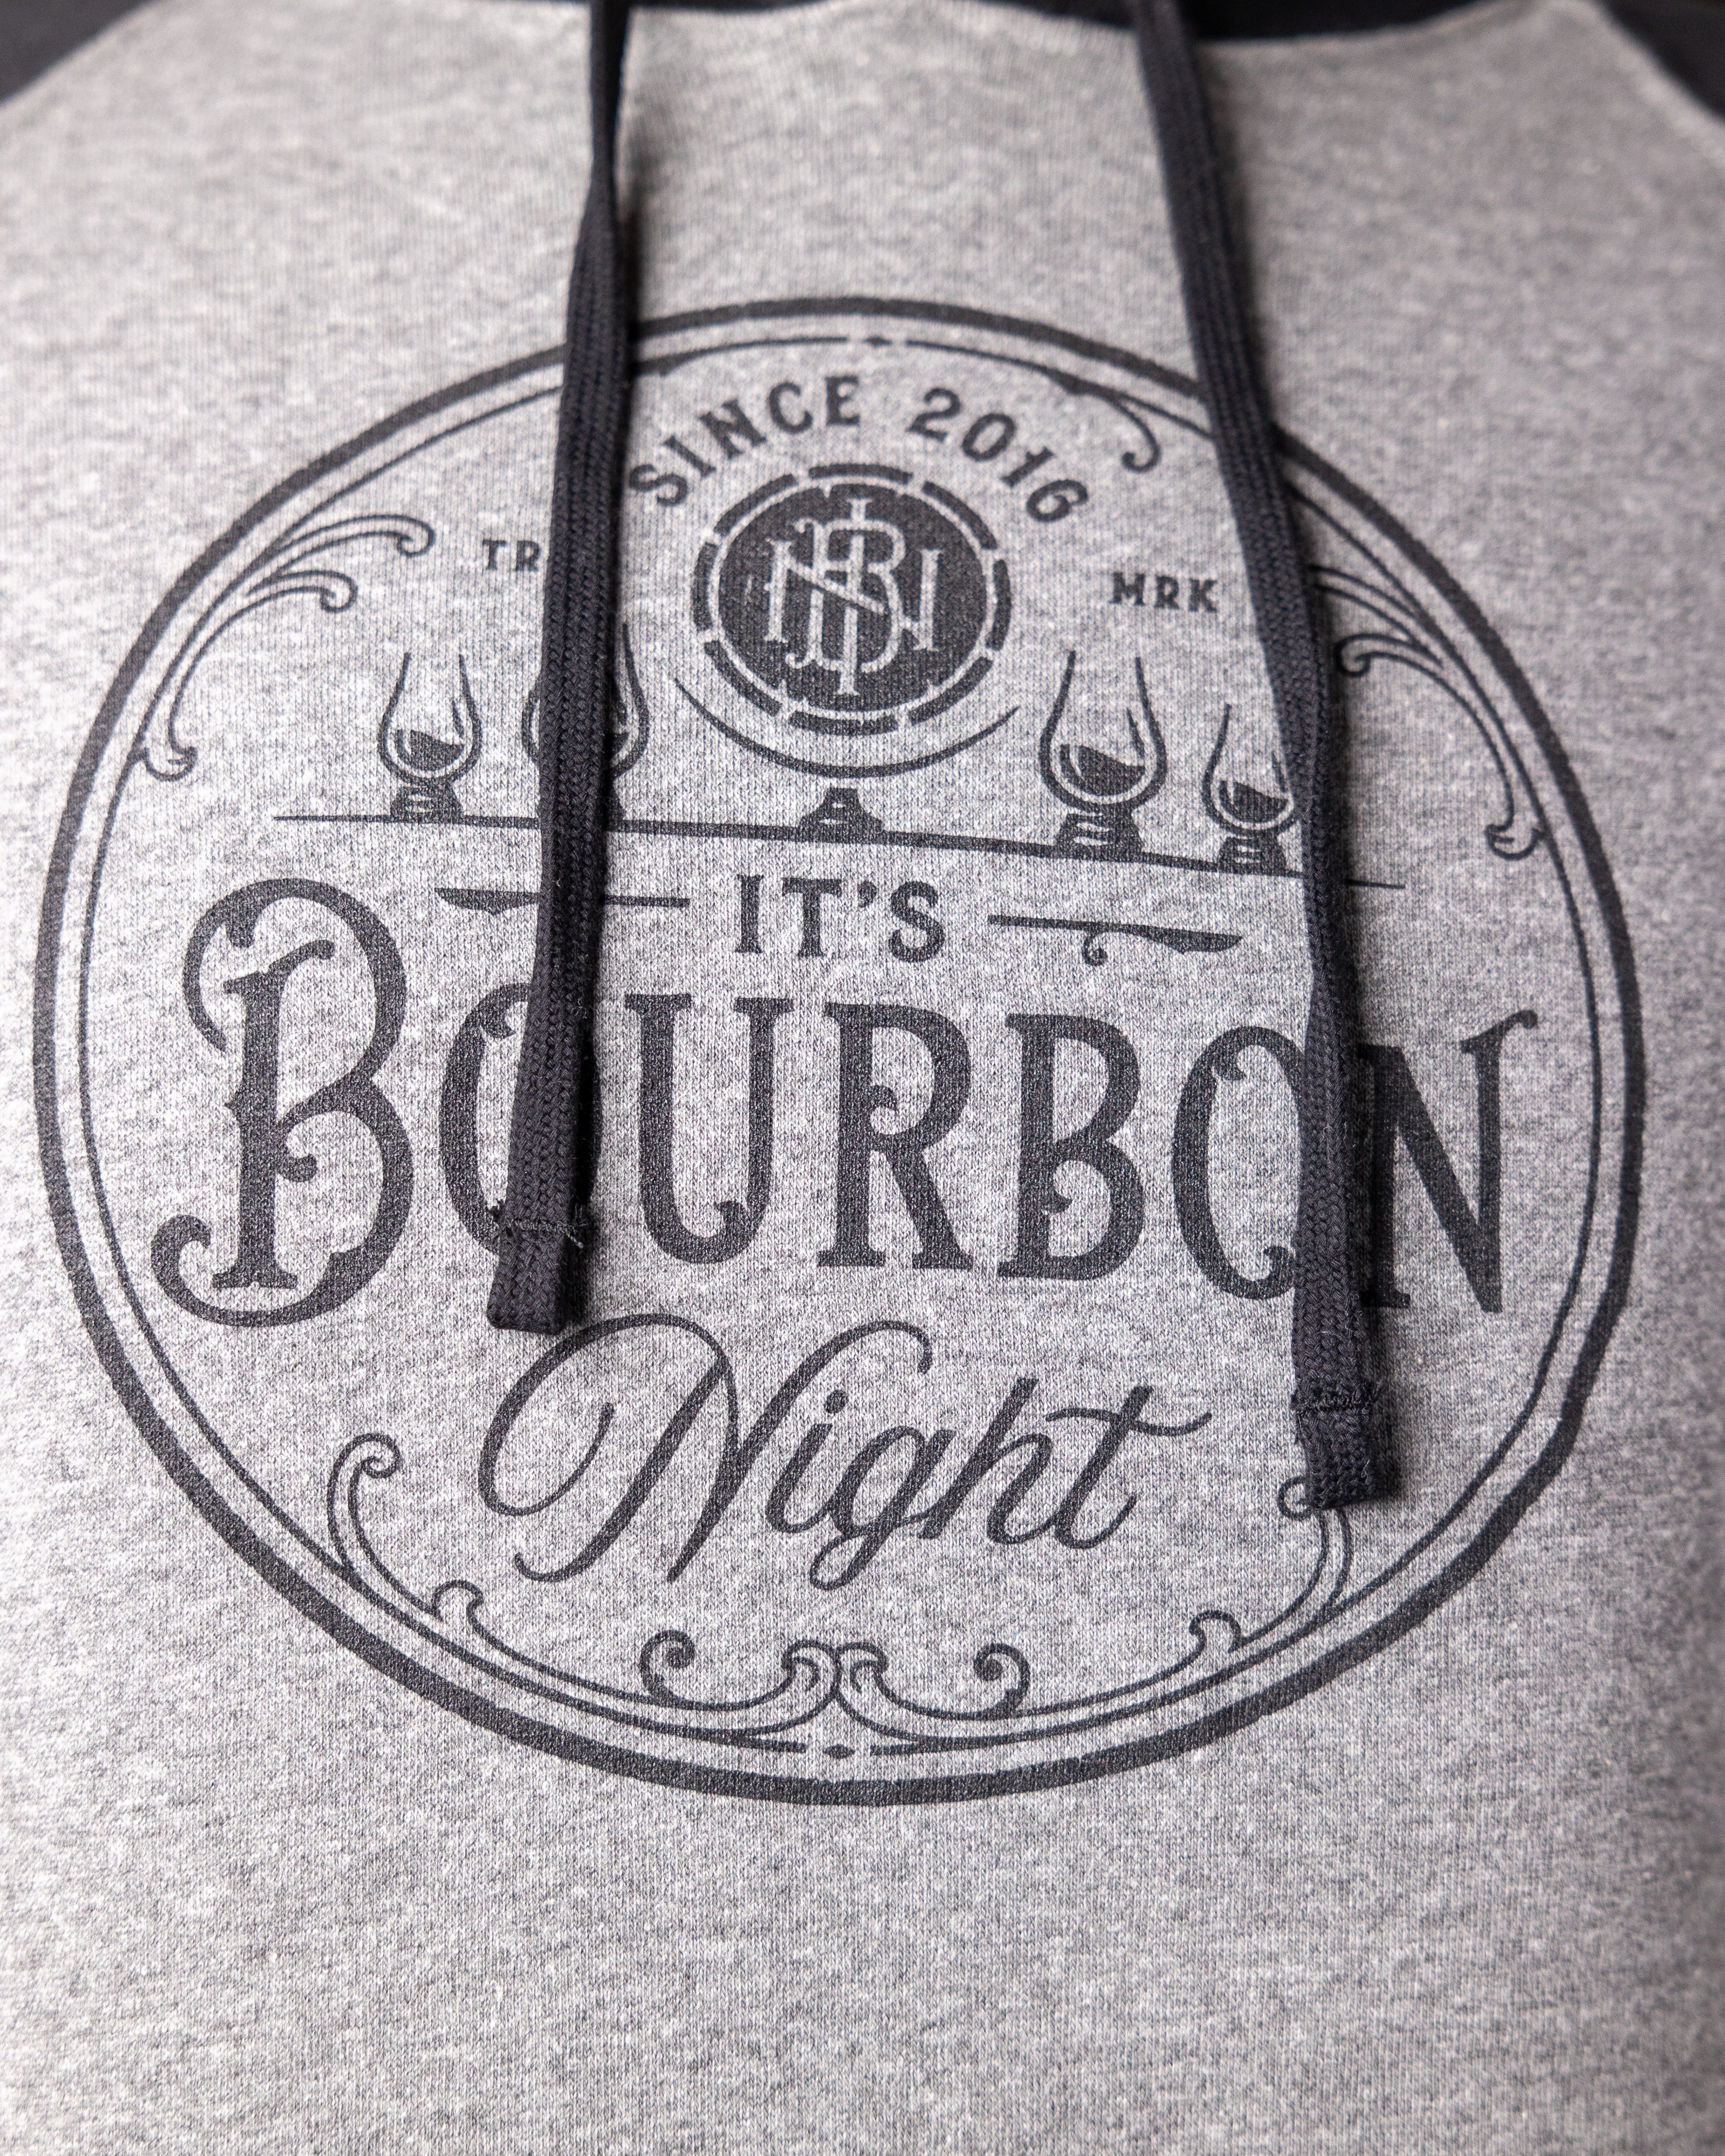 It's Bourbon Night Black & Gray Hoodie